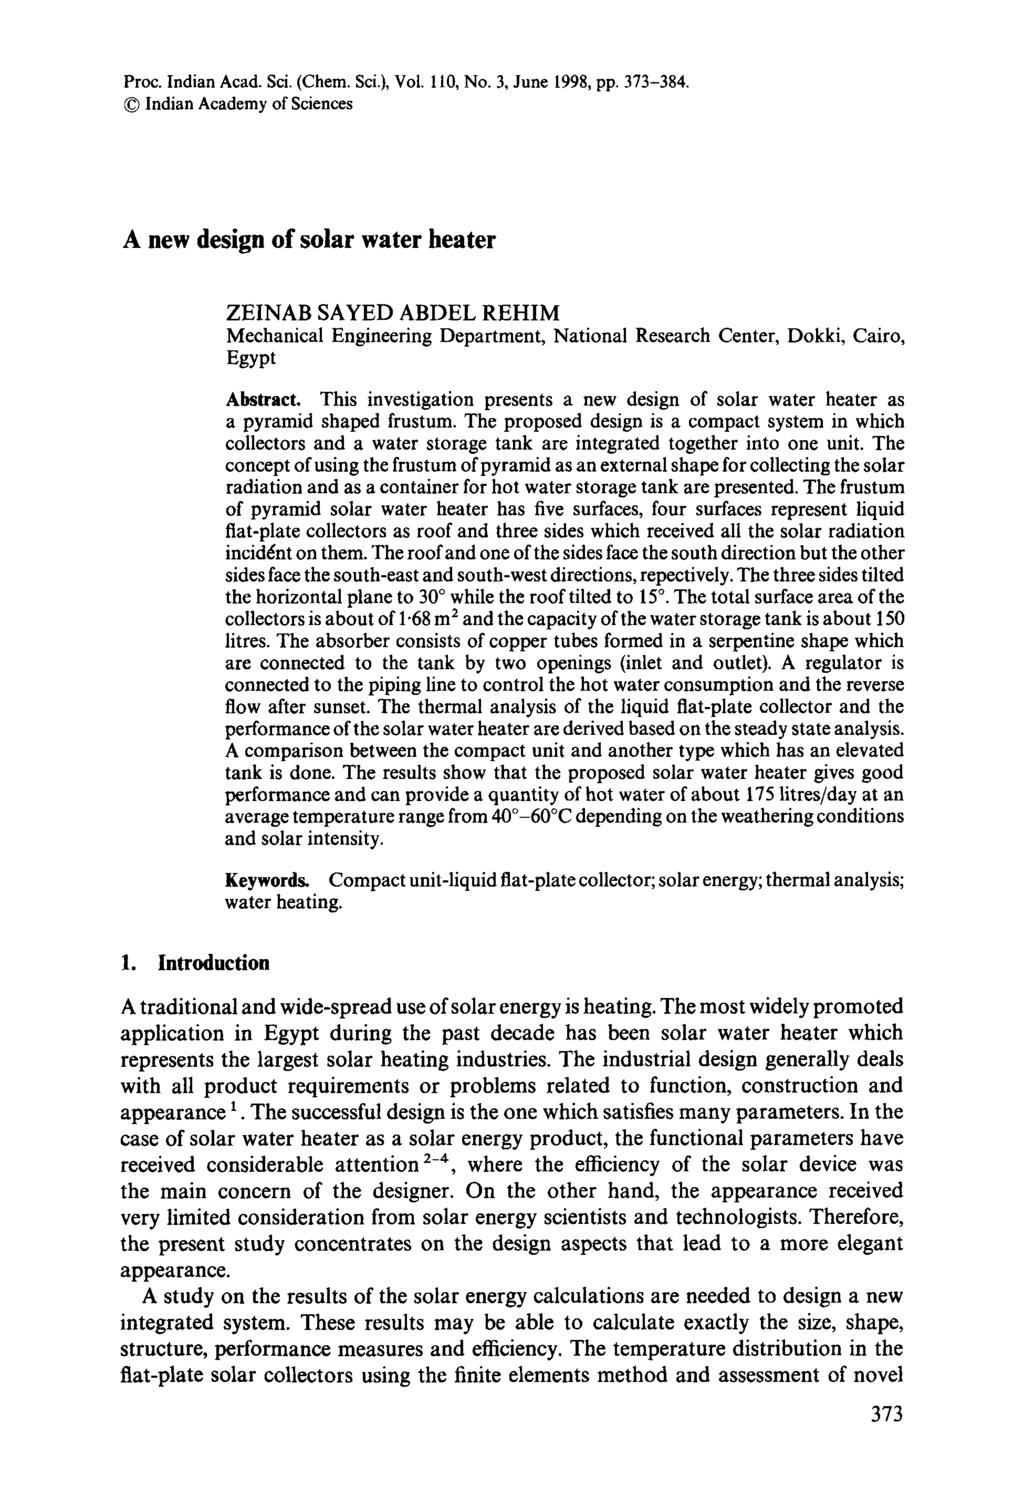 Proc. Indian Acad. Sci. (Chem. Sci.), Vol. 110, No. 3, June 1998, pp. 373-384.